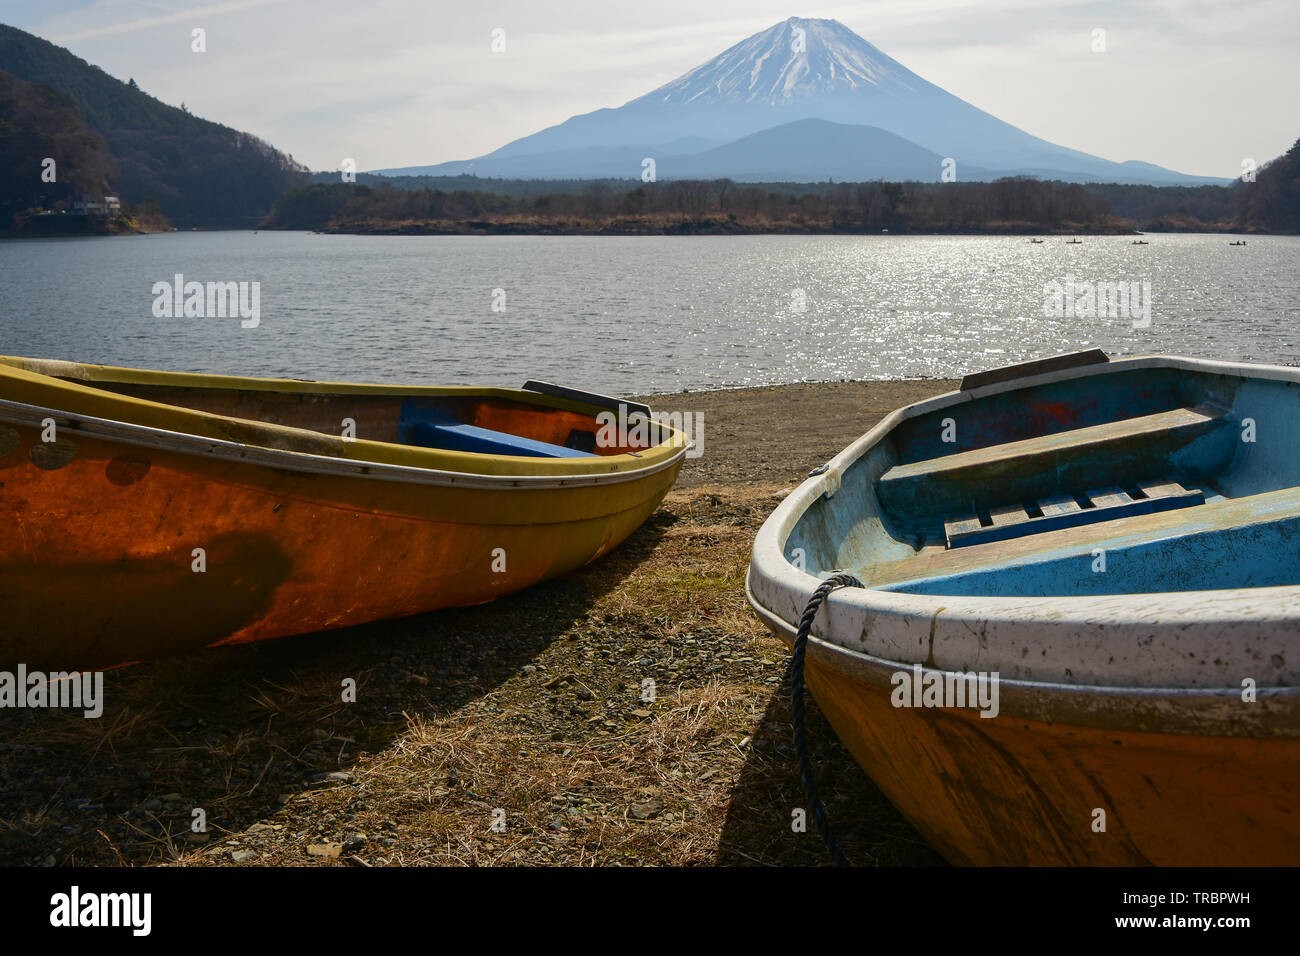 Mount Fuji and boats by Lake Shoji, Japan Stock Photo